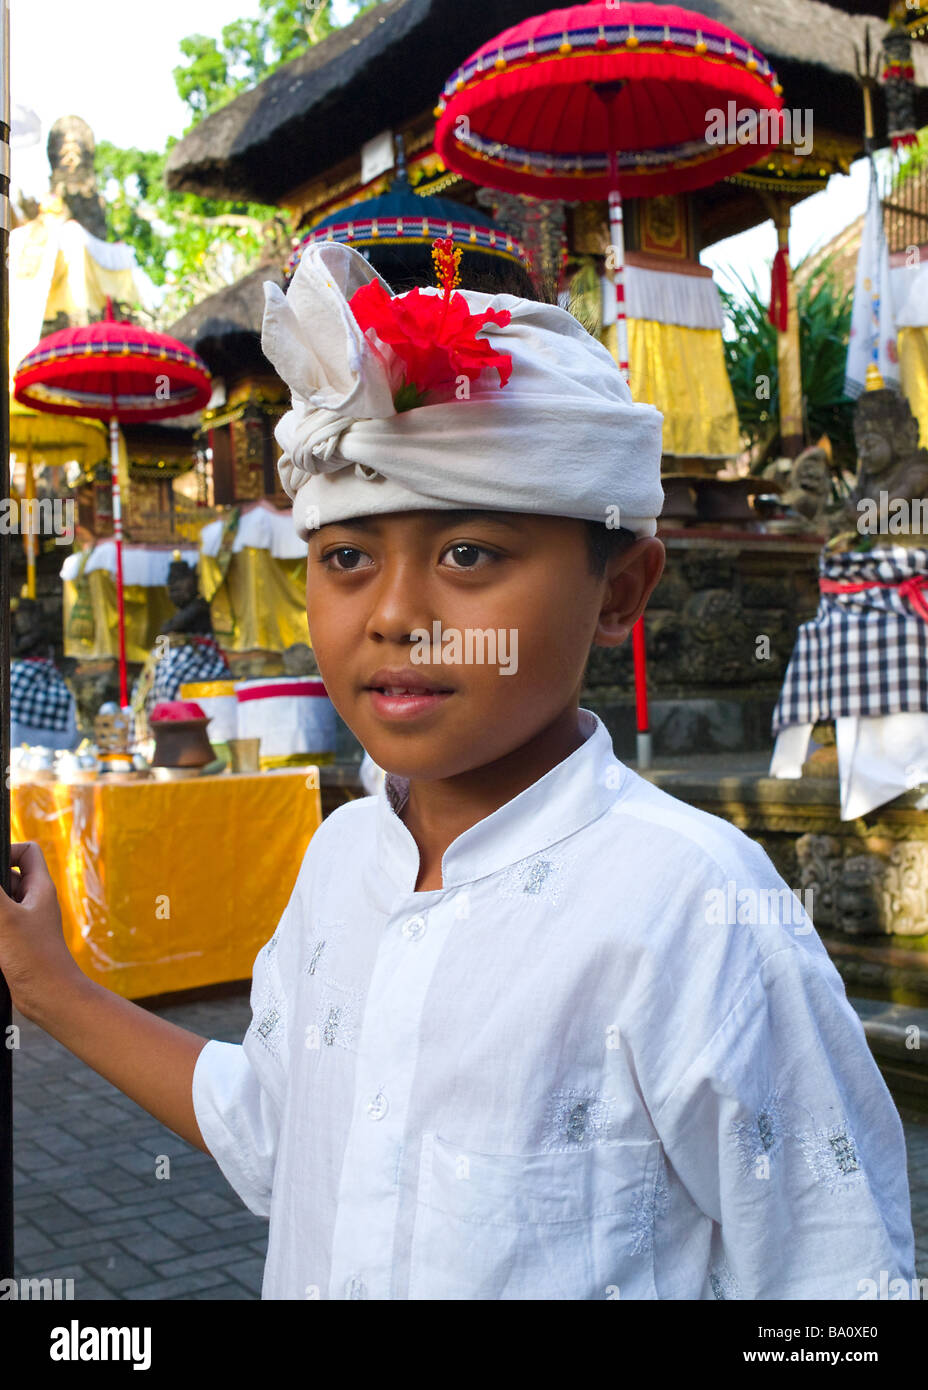 A boy at a Hindu Temple Ceremony - Ubud, Bali, Indonesia Stock Photo